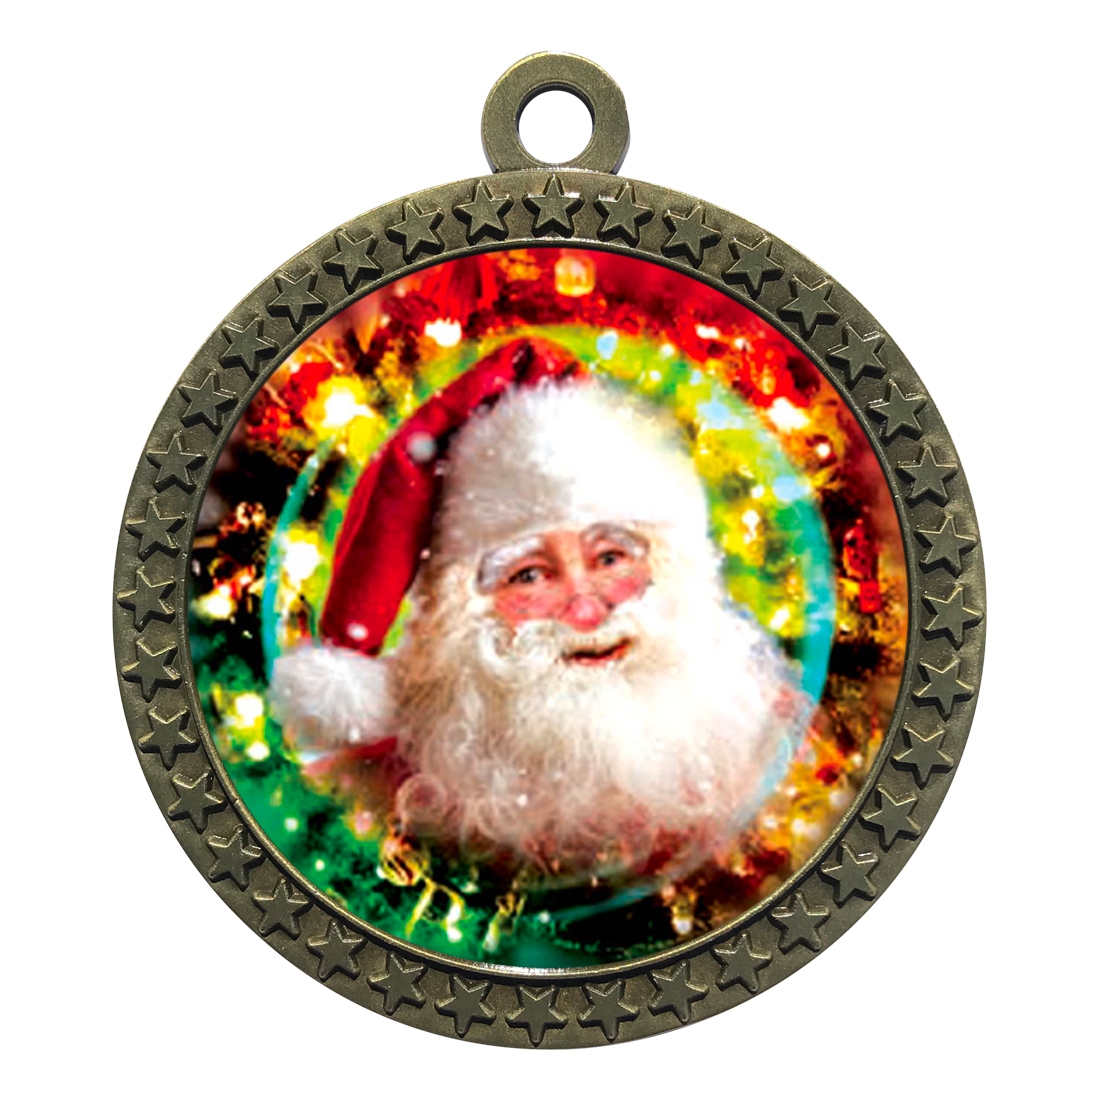 2-1/2" Santa Claus Christmas Medal